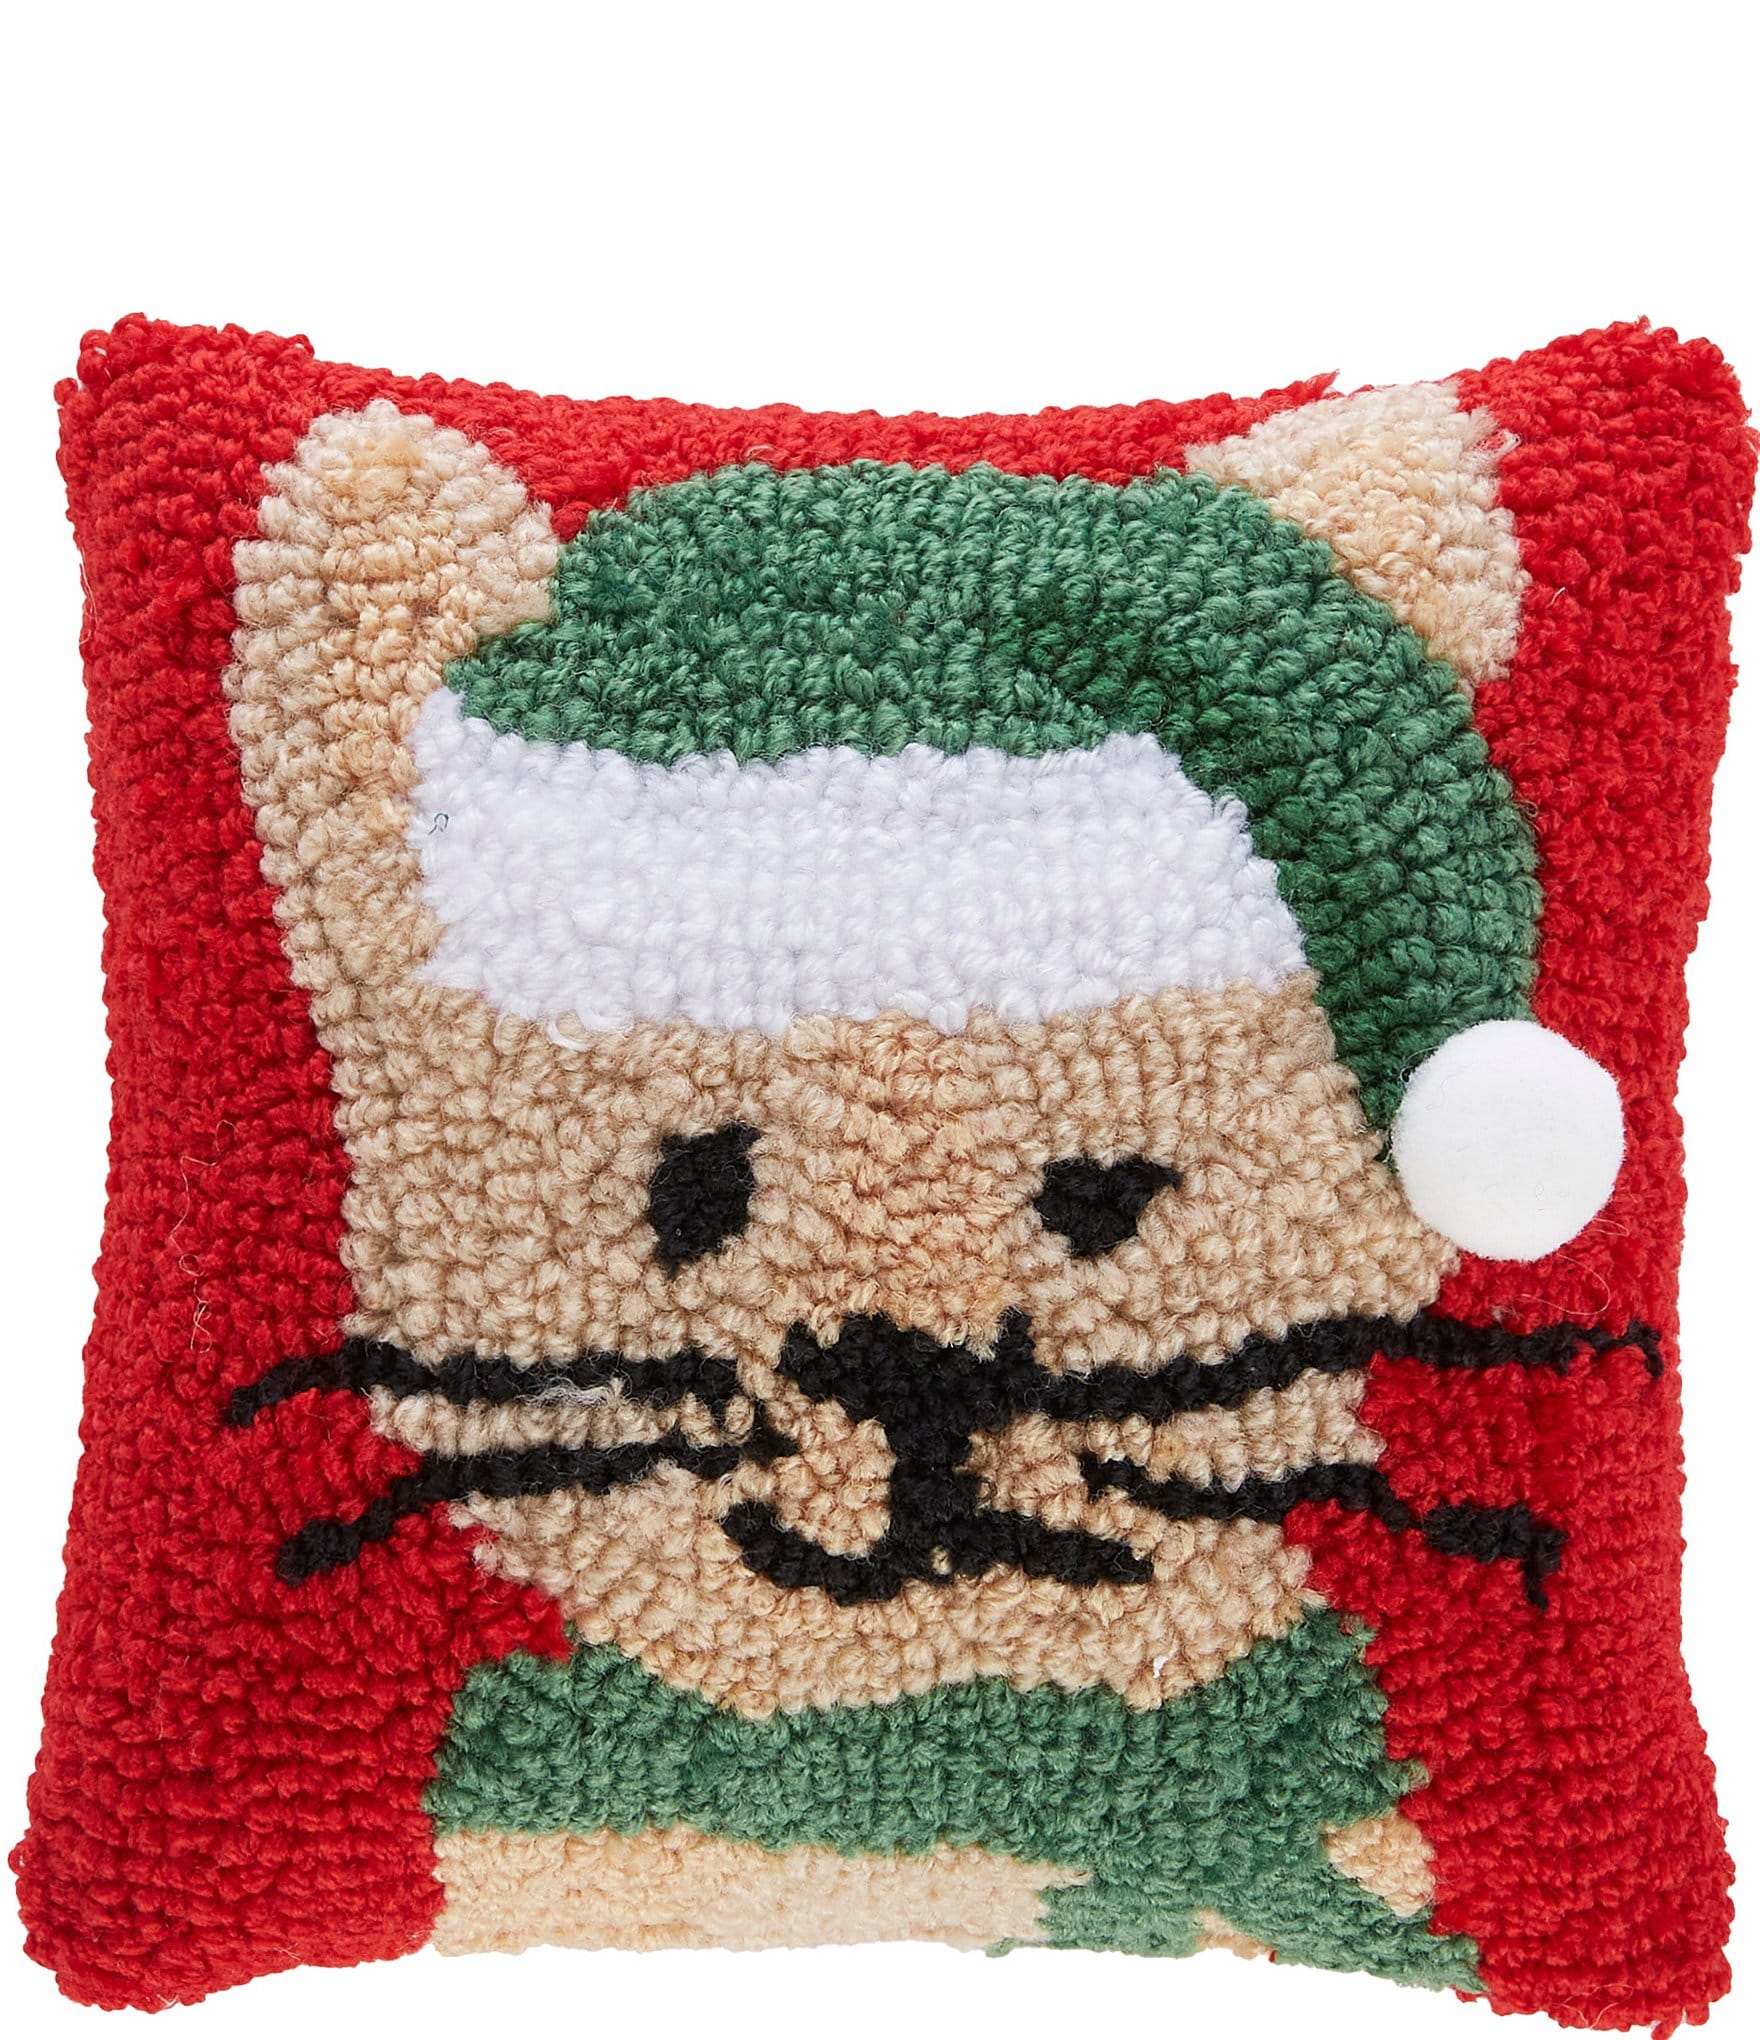 https://dimg.dillards.com/is/image/DillardsZoom/zoom/cf-home-dillards-exclusive-christmas-kitty-hooked-knit-petite-square-pillow/00000000_zi_f0730431-d426-4d88-b3ca-d1d1866e30a1.jpg